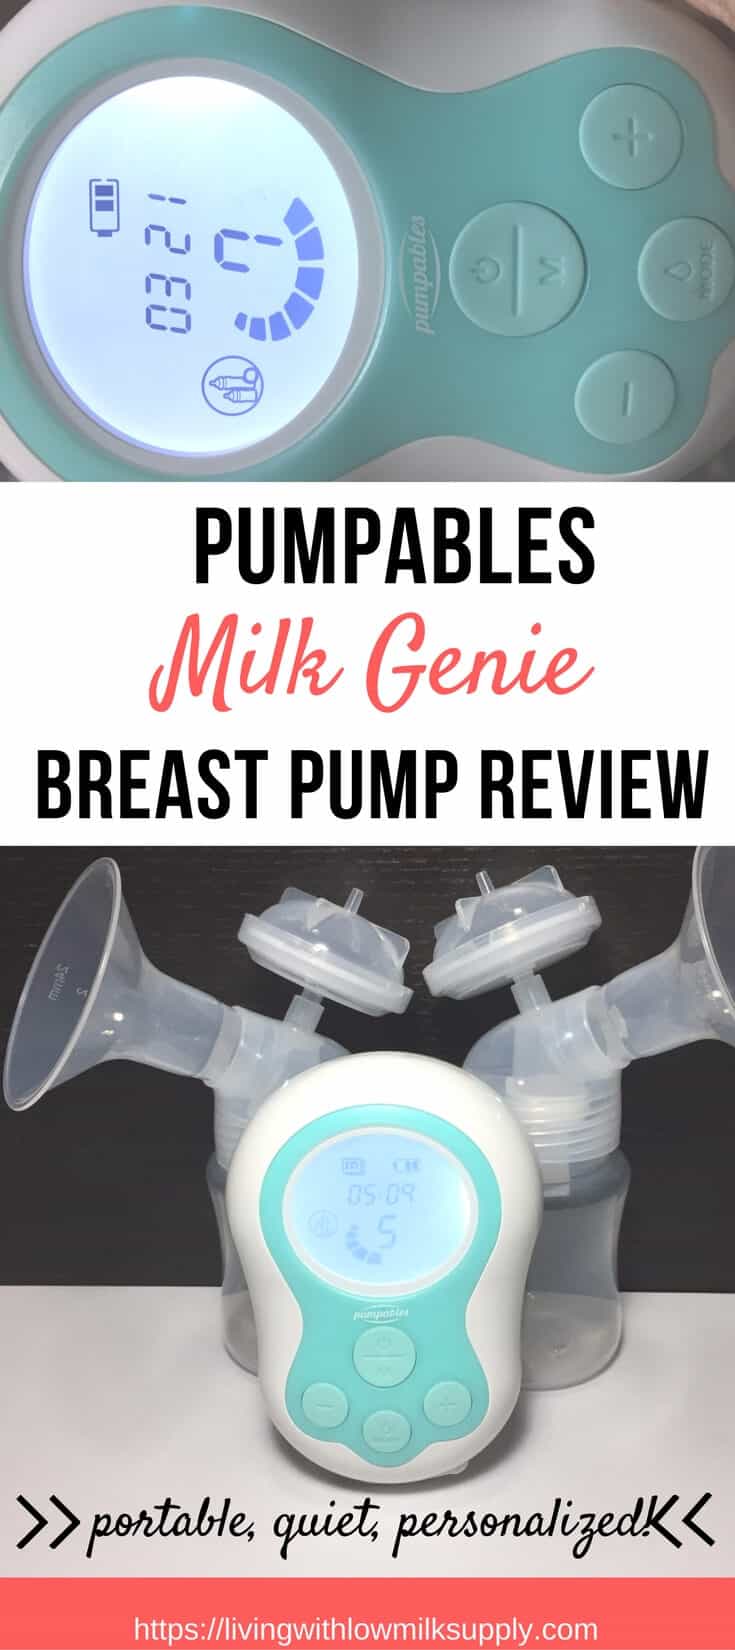 milk genie breast pump reviews from pumpables